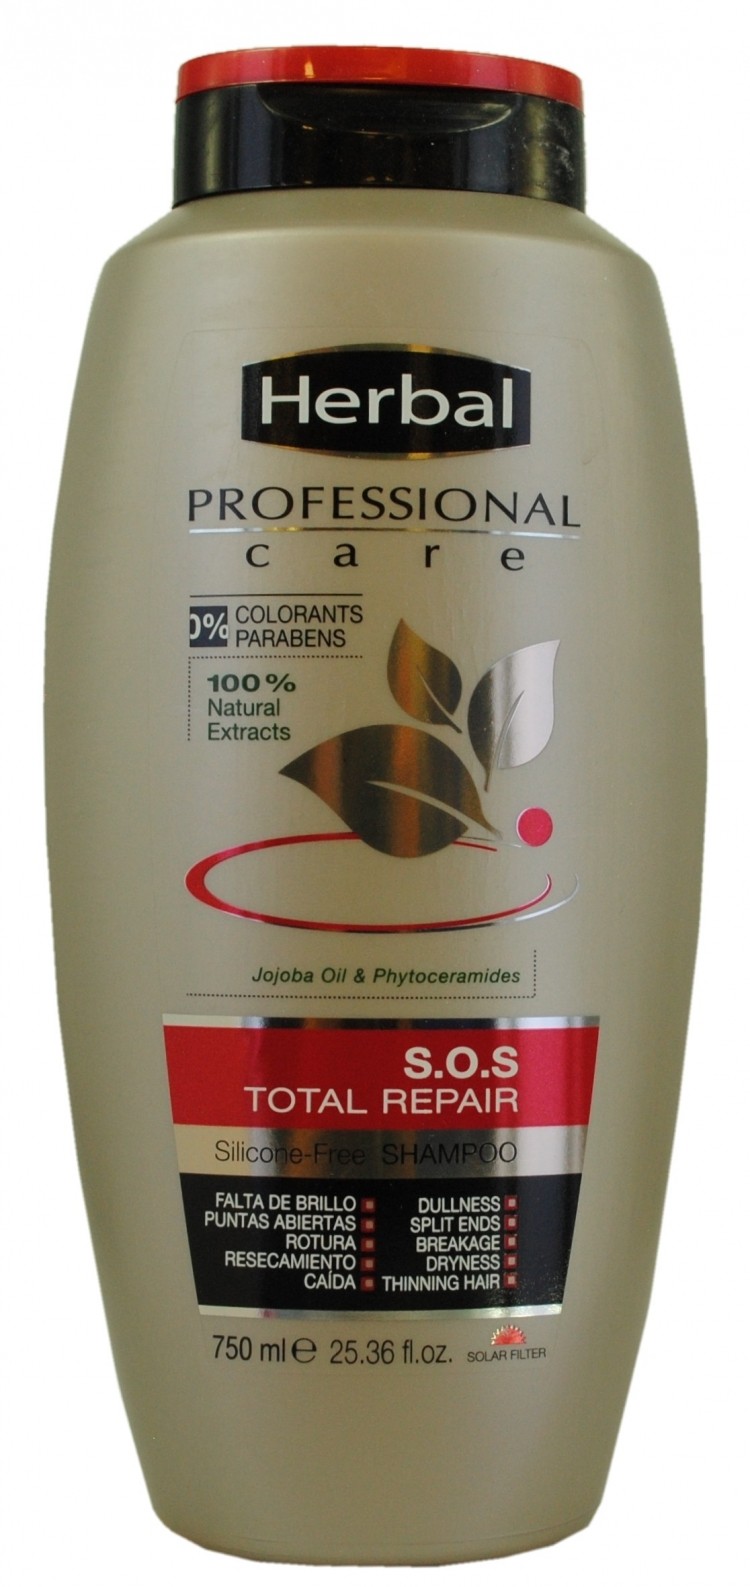 Herbal Professional Care silicone free shampoo